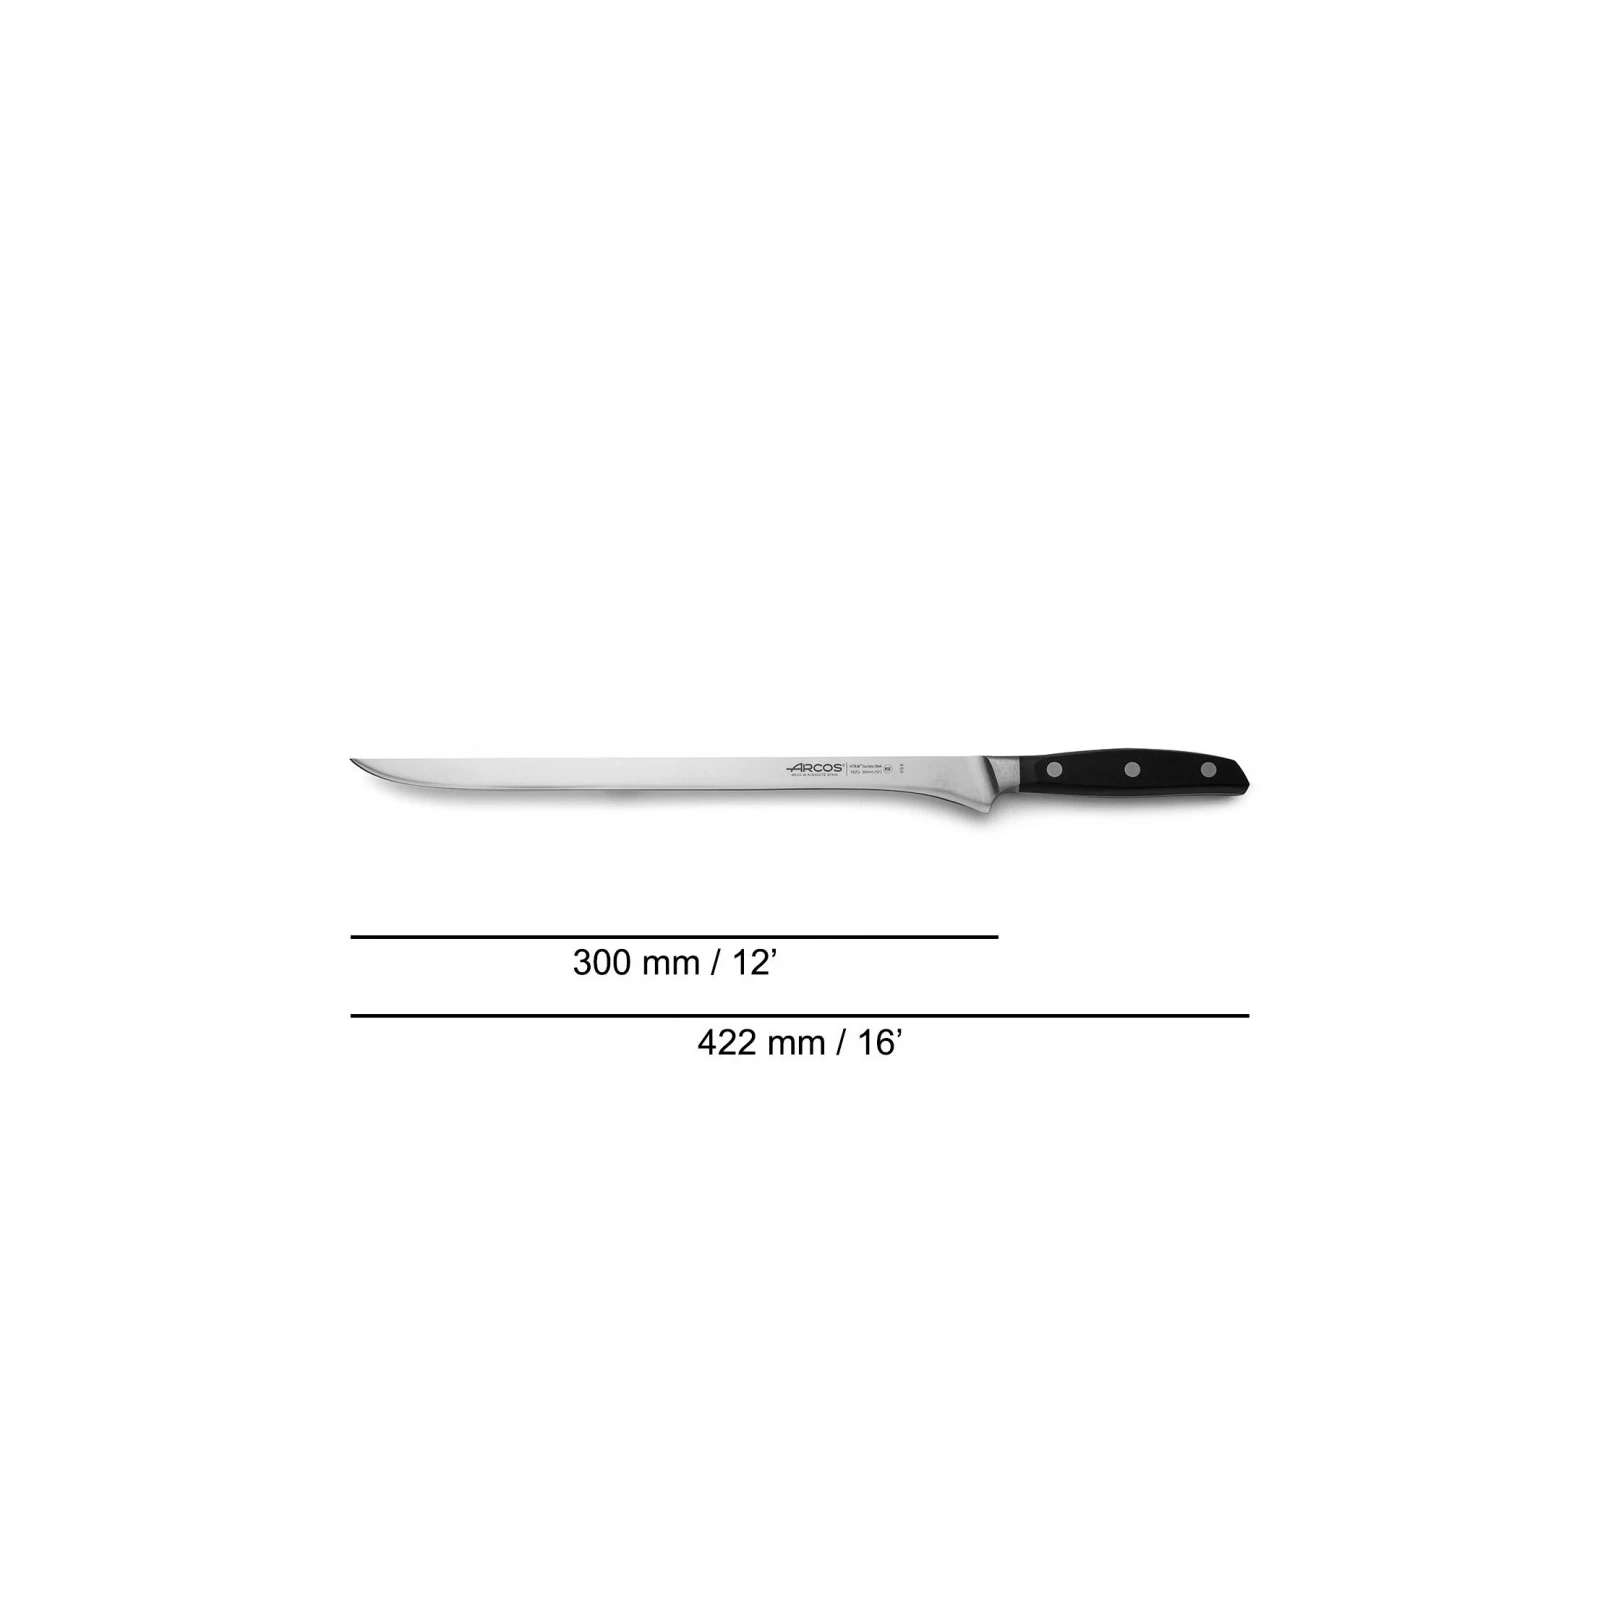 Кухонный нож Arcos Manhattan Кіріцуке 190 мм (161600) изображение 2